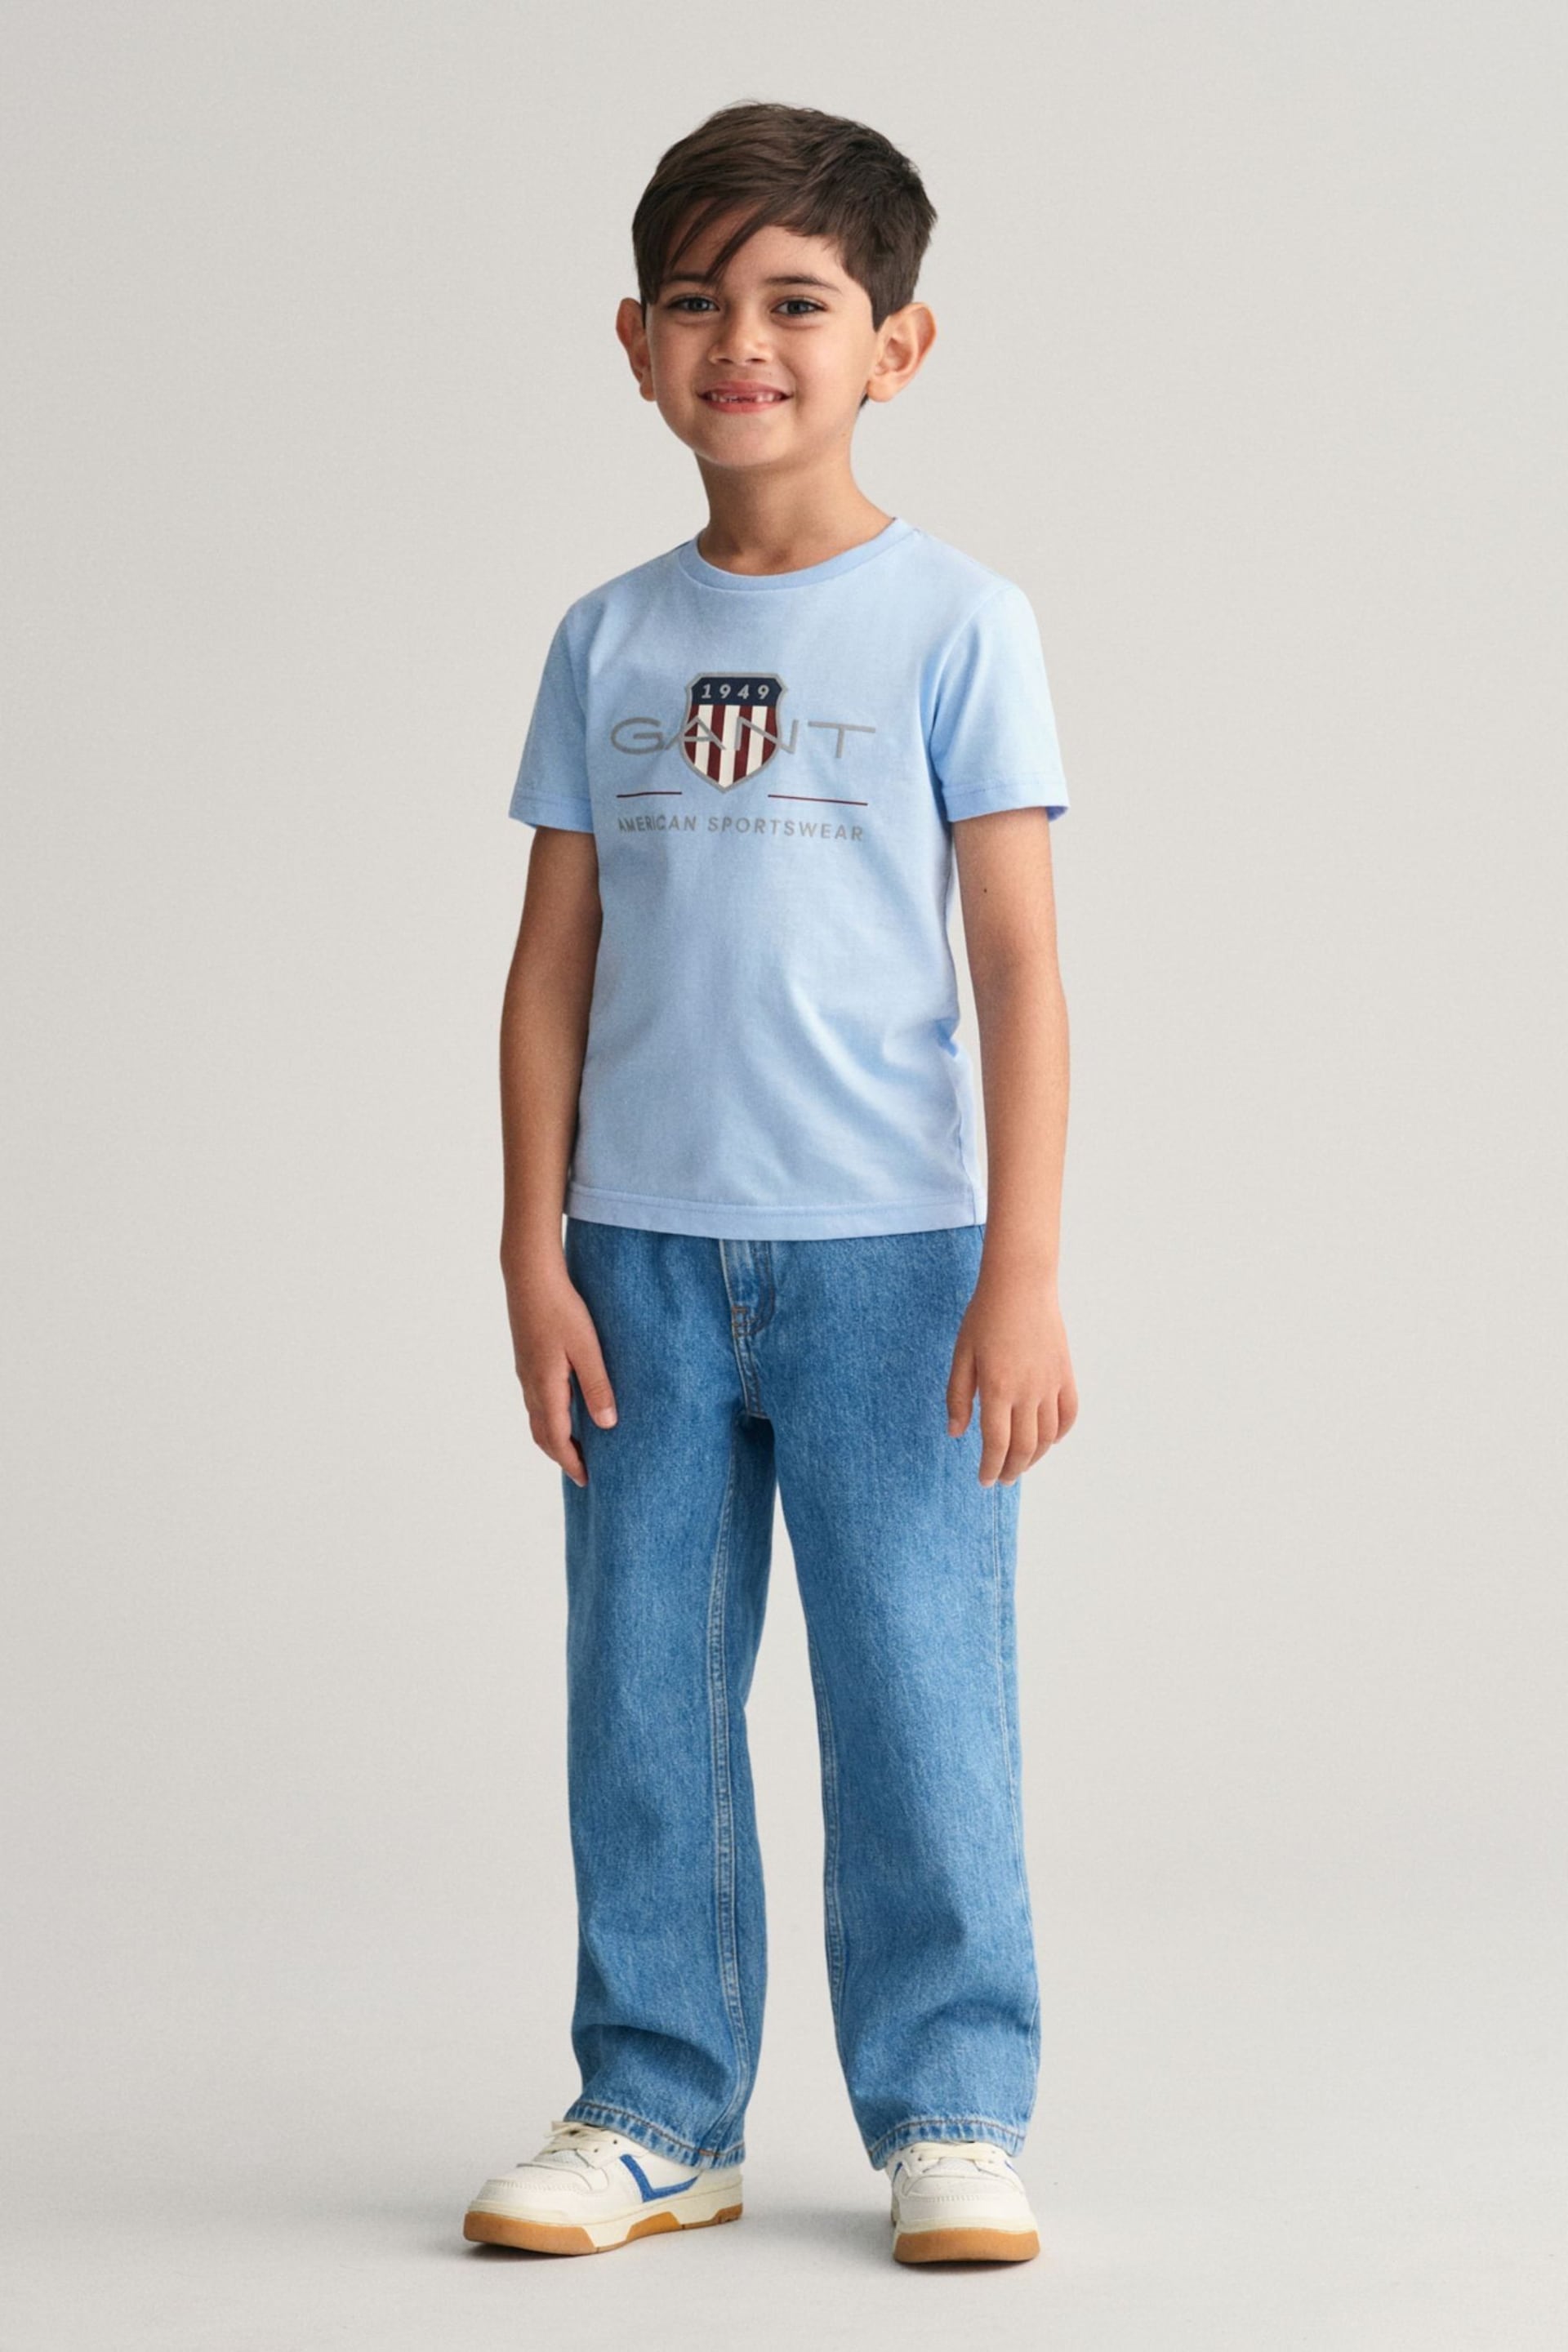 GANT Kids Archive Shield T-Shirt - Image 3 of 6